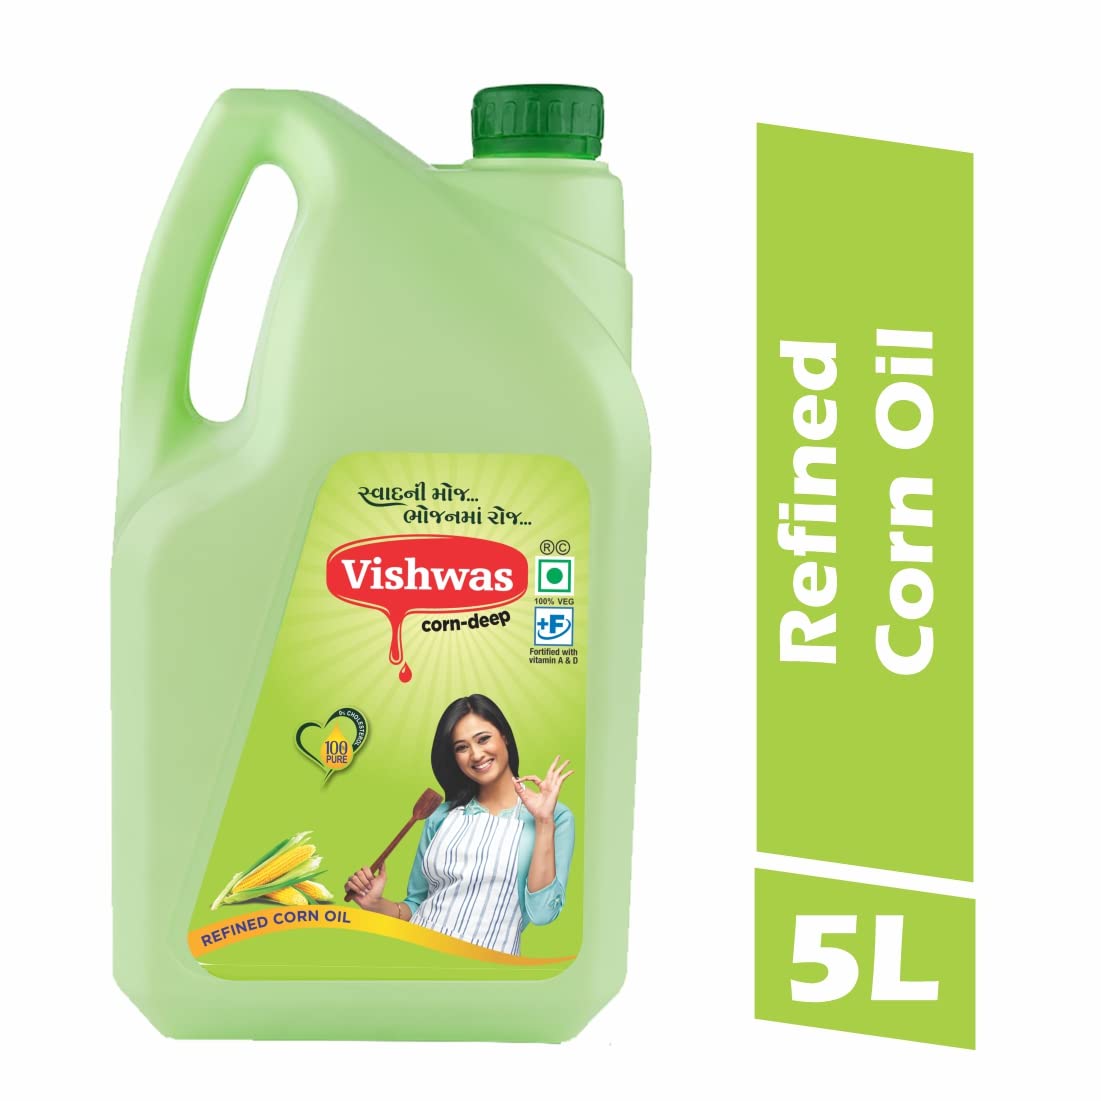 5993 Vishwas Refined Corn Oil 5 Litre Bottle | Makai Oil 100% Pure Corn Cooking Oil | Pure Edible Corn Oil 5L